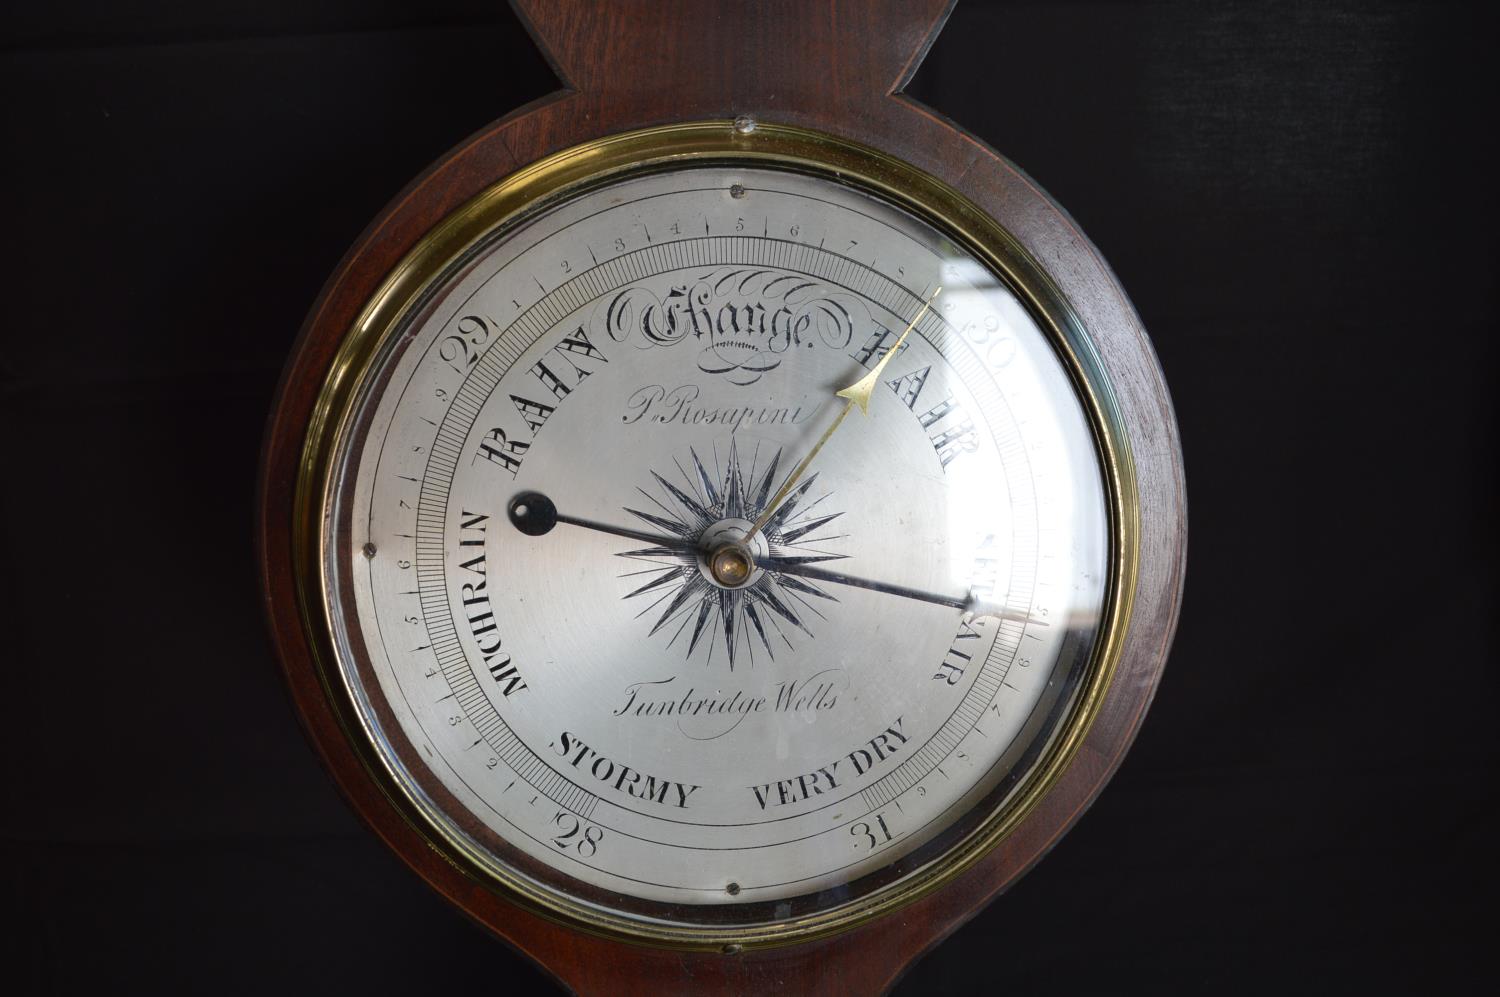 P Rosapini, Tunbridge Wells inlaid mahogany cartwheel barometer with silvered dial - 97cm tall - Image 2 of 2